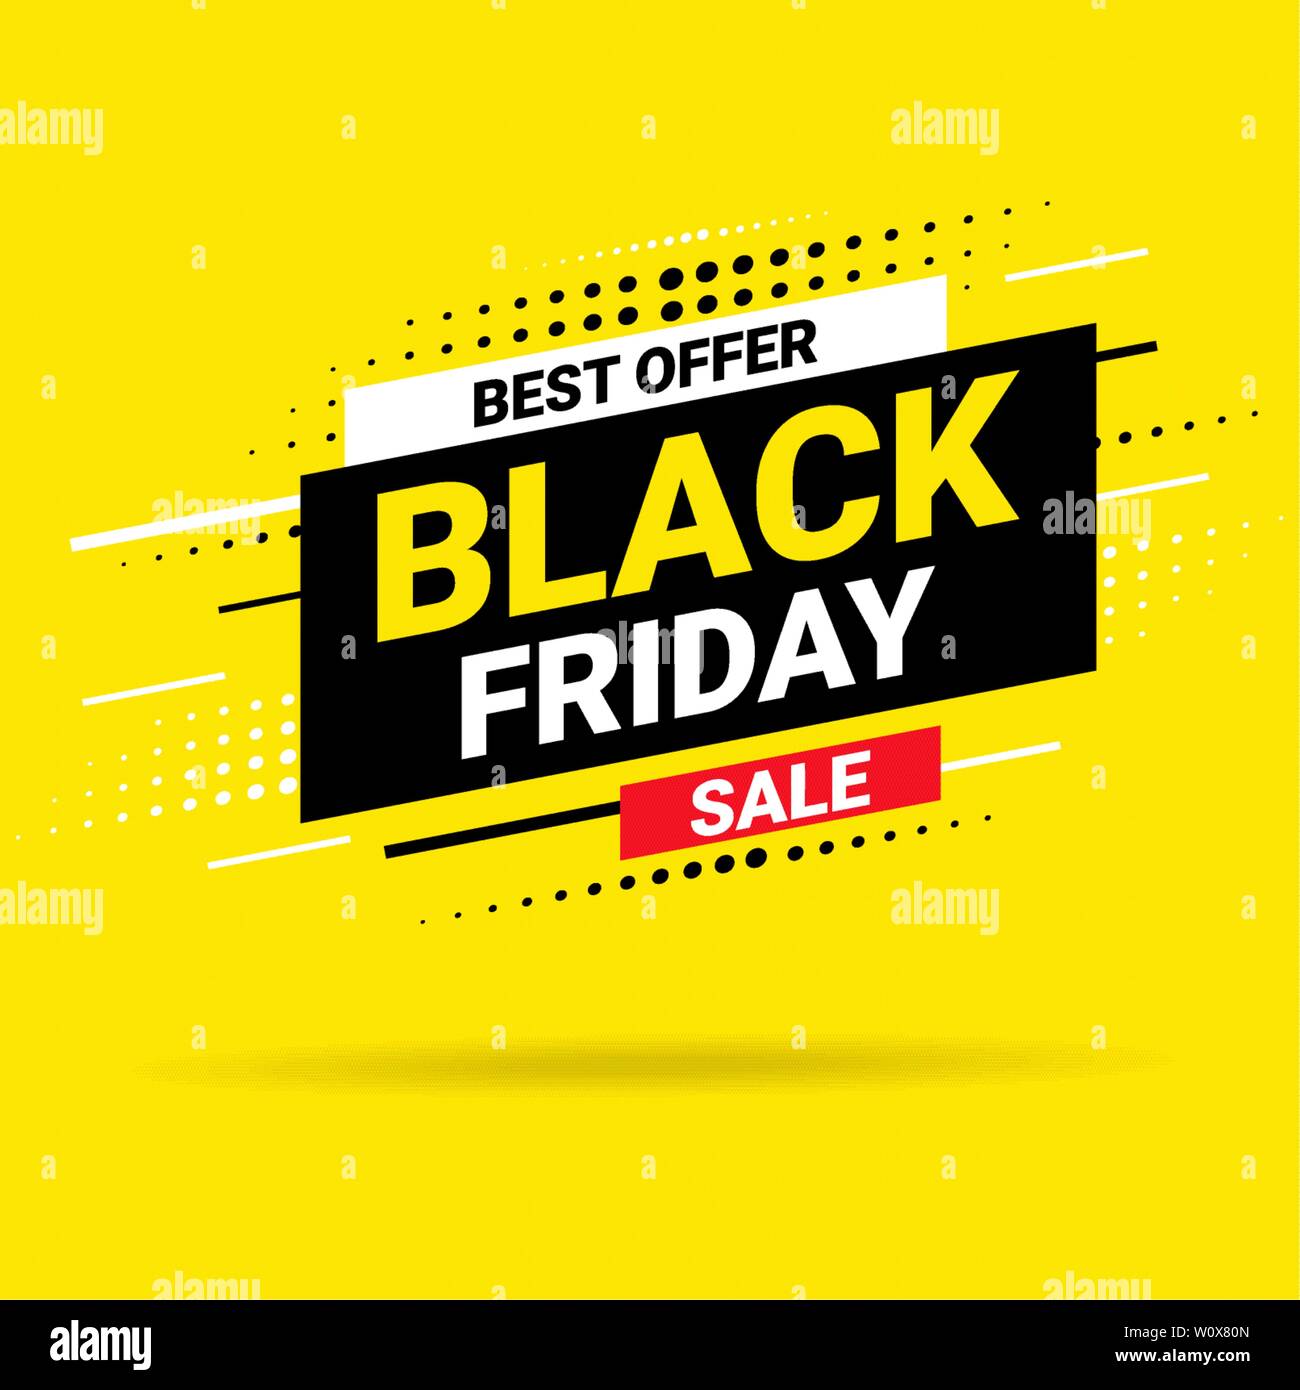 Black Friday Sale Poster. Modern concept for cover design